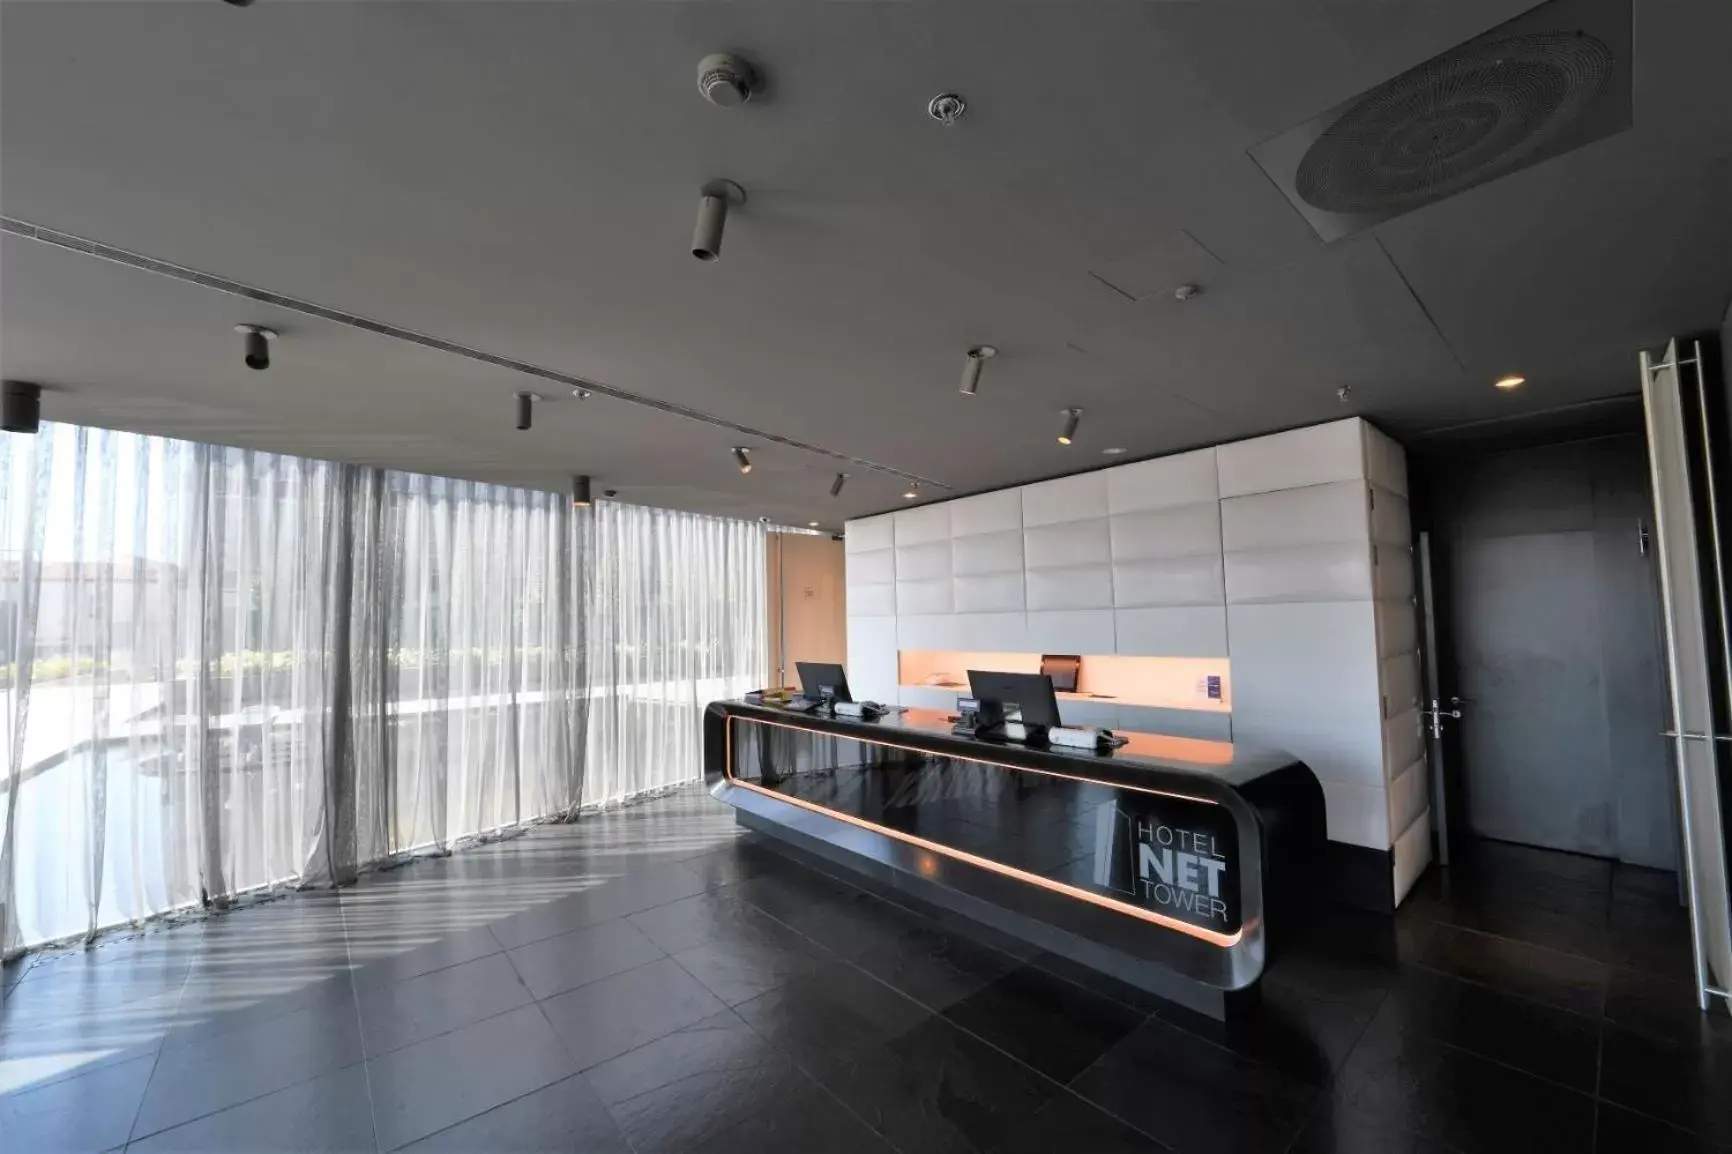 Lobby or reception in Best Western Plus Net Tower Hotel Padova